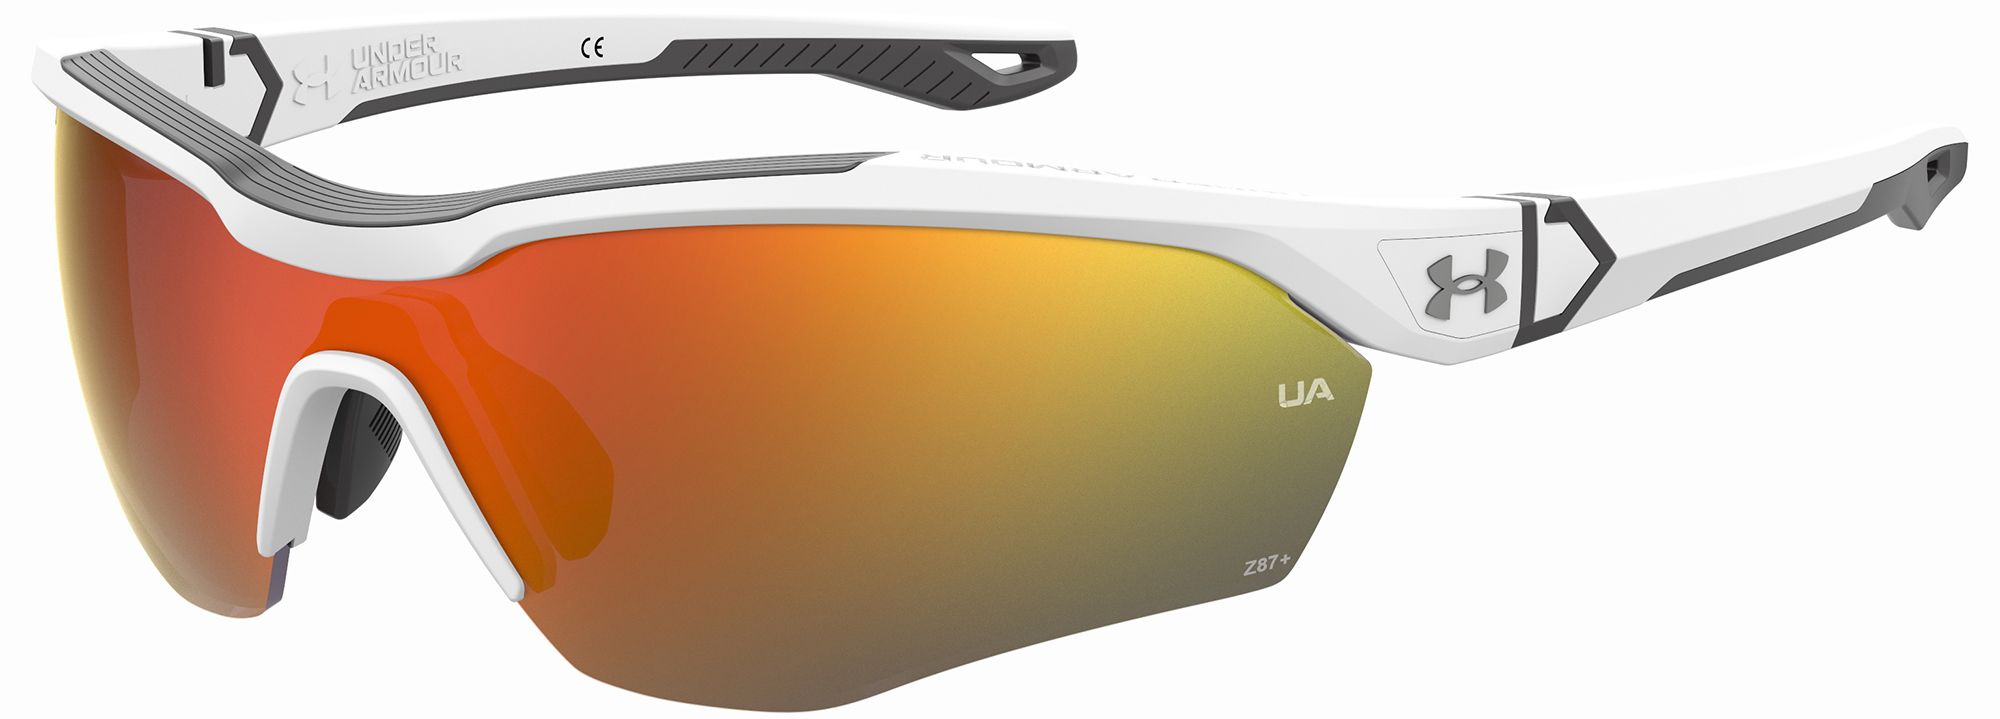 Under Armour Yard Pro Tuned Baseball Sunglasses Accessories Under Armour Matte White/Jet Grey/Tuned Baseball Orange Lense  